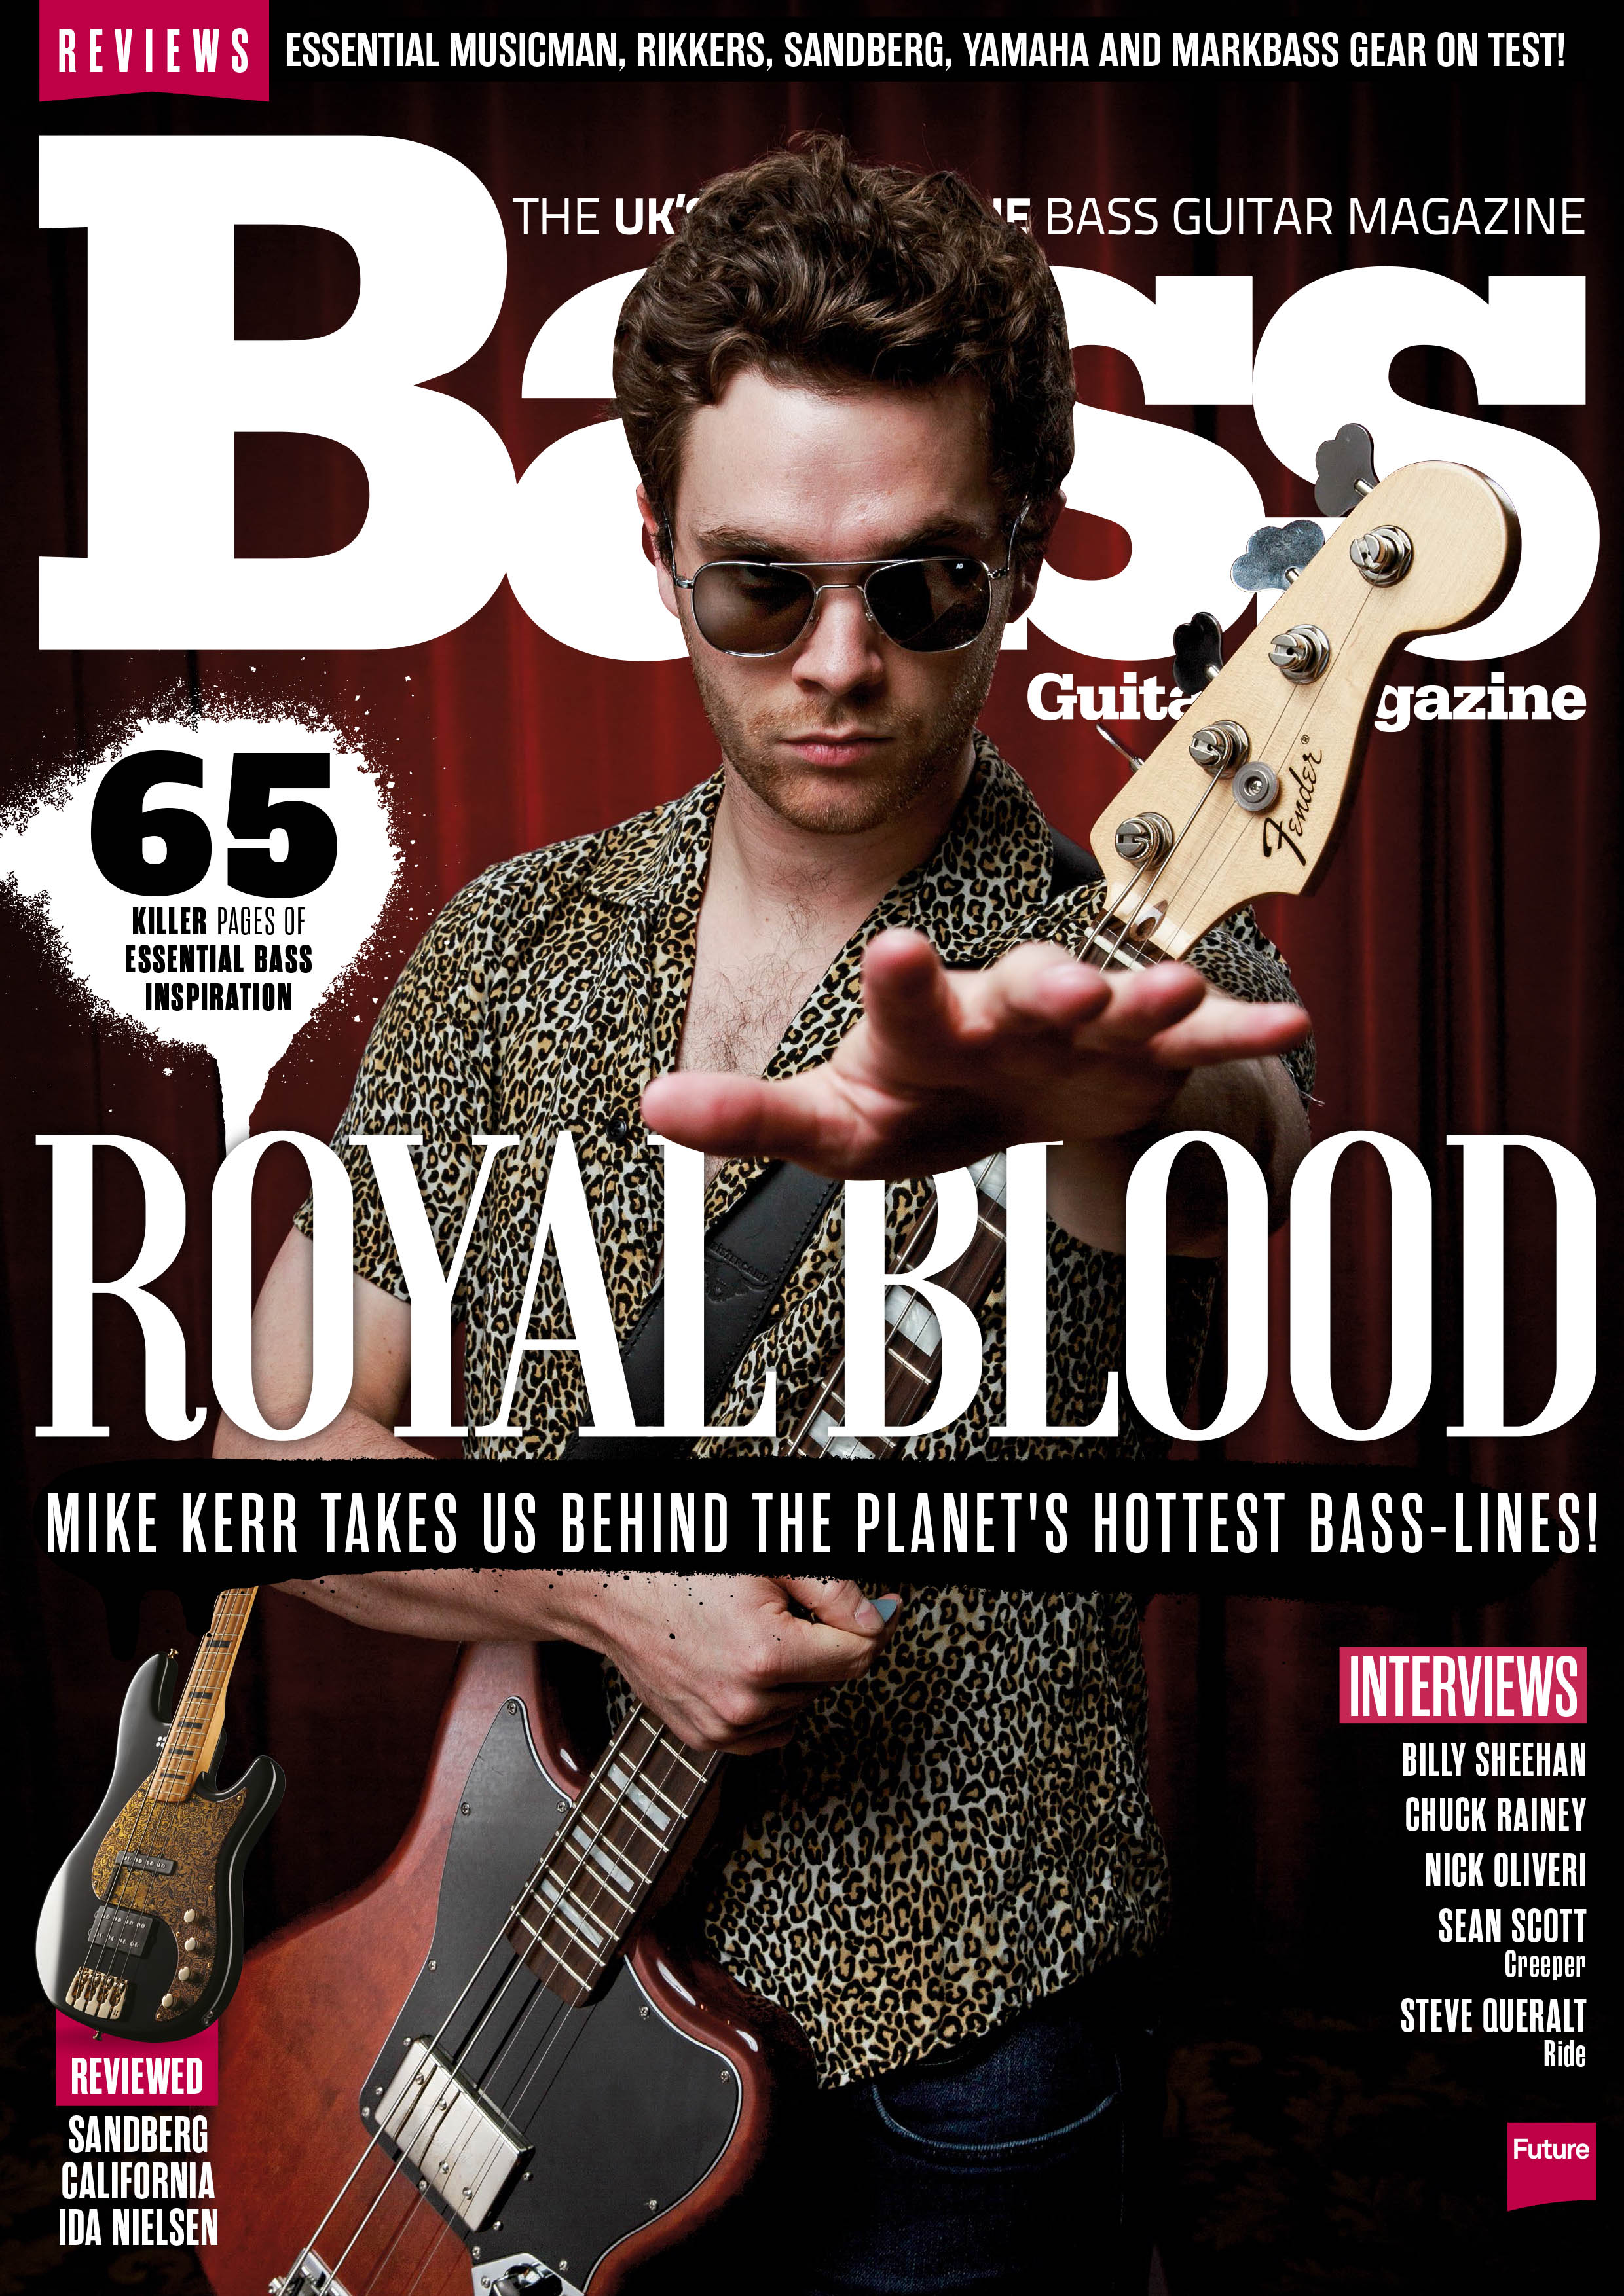 Bass Guitar Magazine 146 Royal Blood by Adam Gasson / adamgasson.com